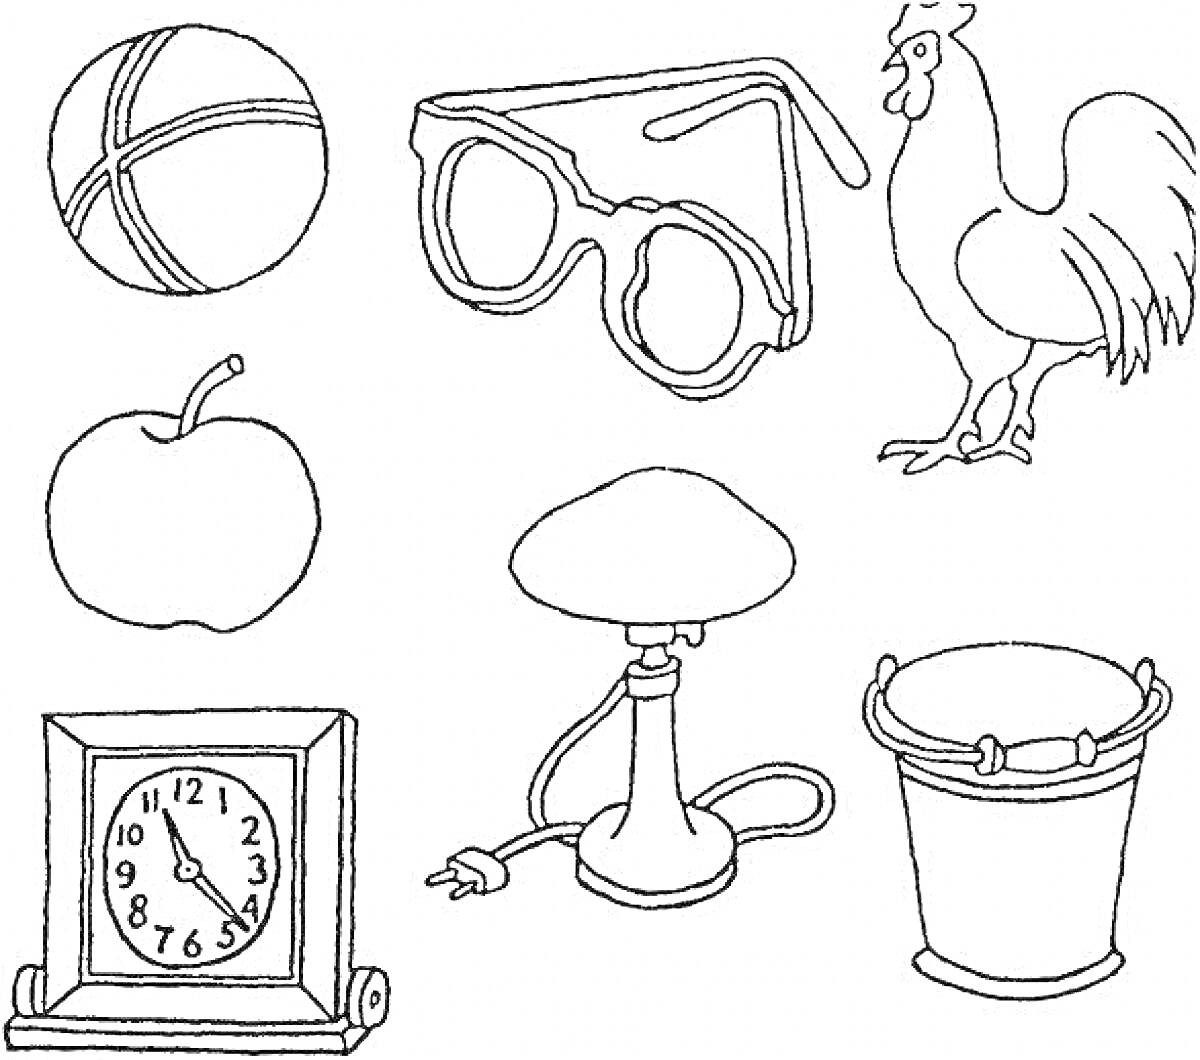 Раскраска Мяч, очки, петух, яблоко, настольные часы, настольная лампа, ведро.